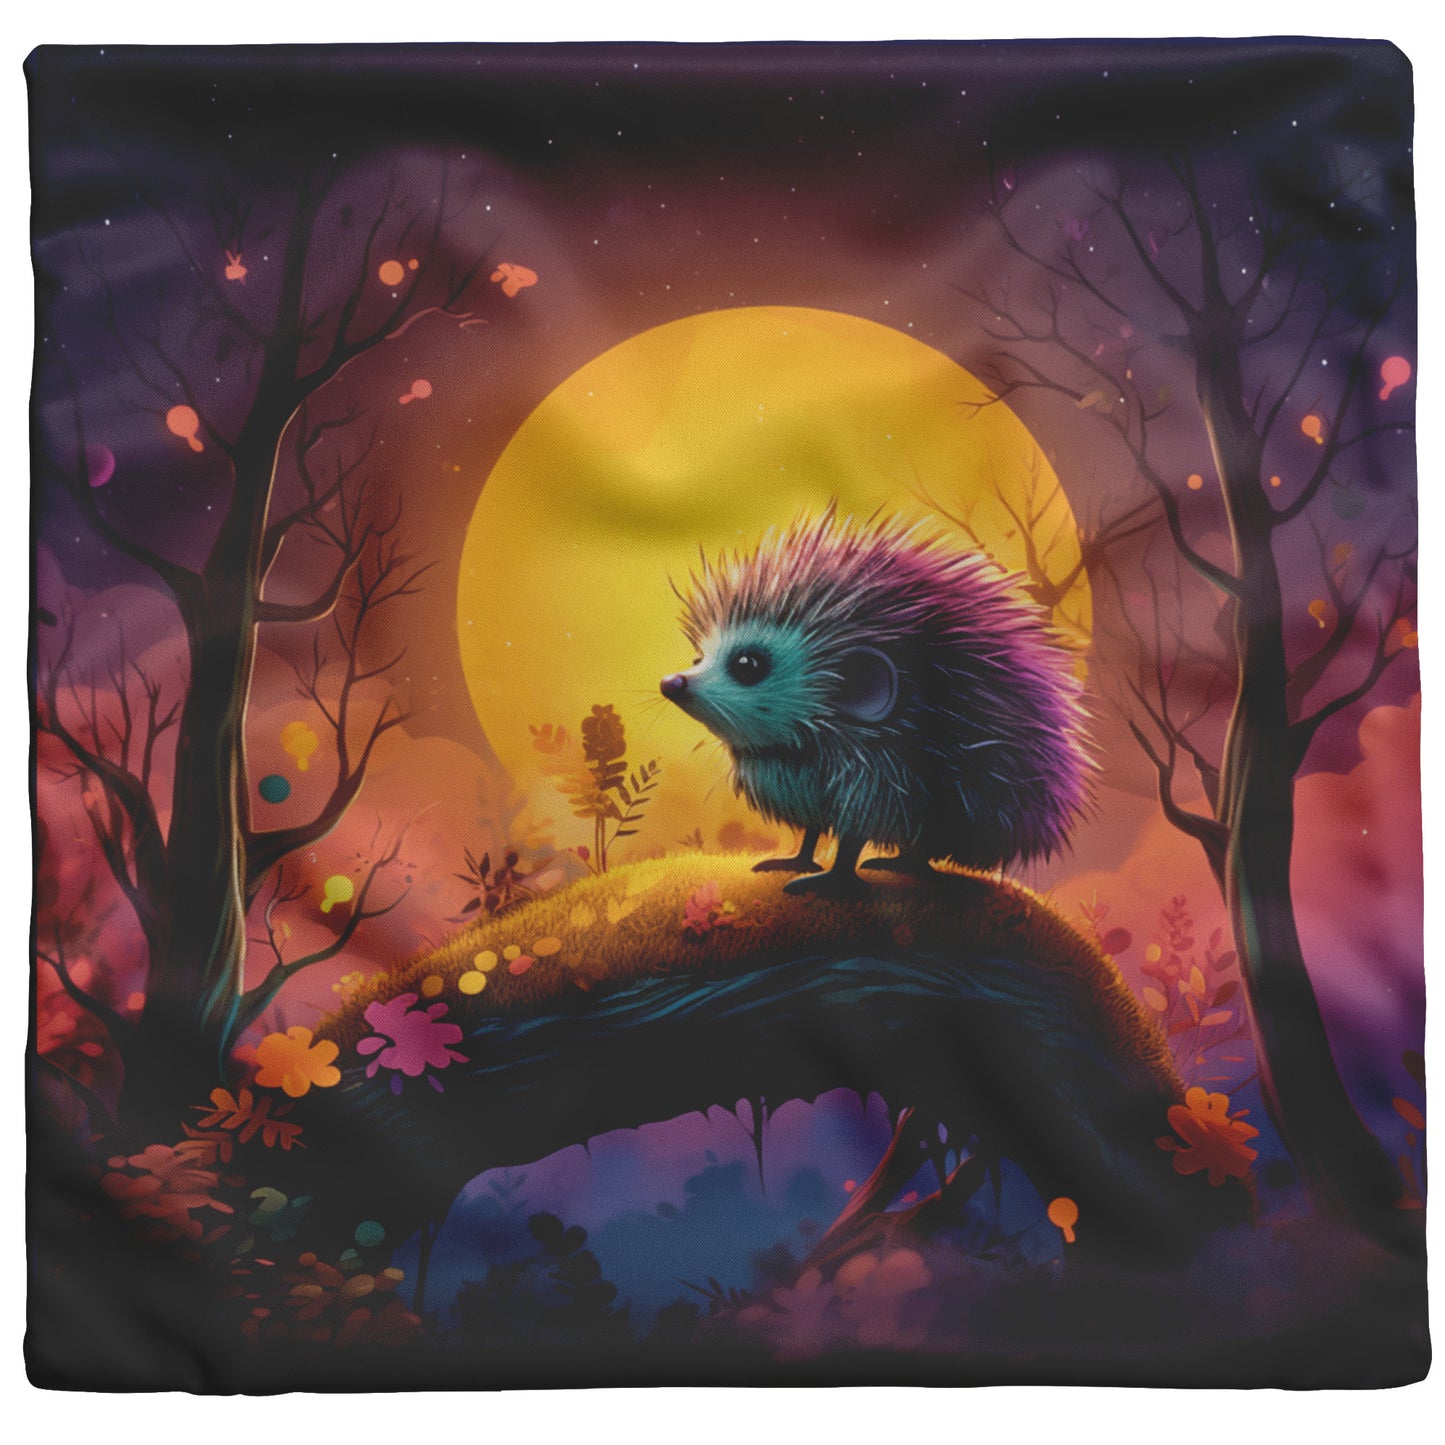 Pillow - Cute Hedgehog